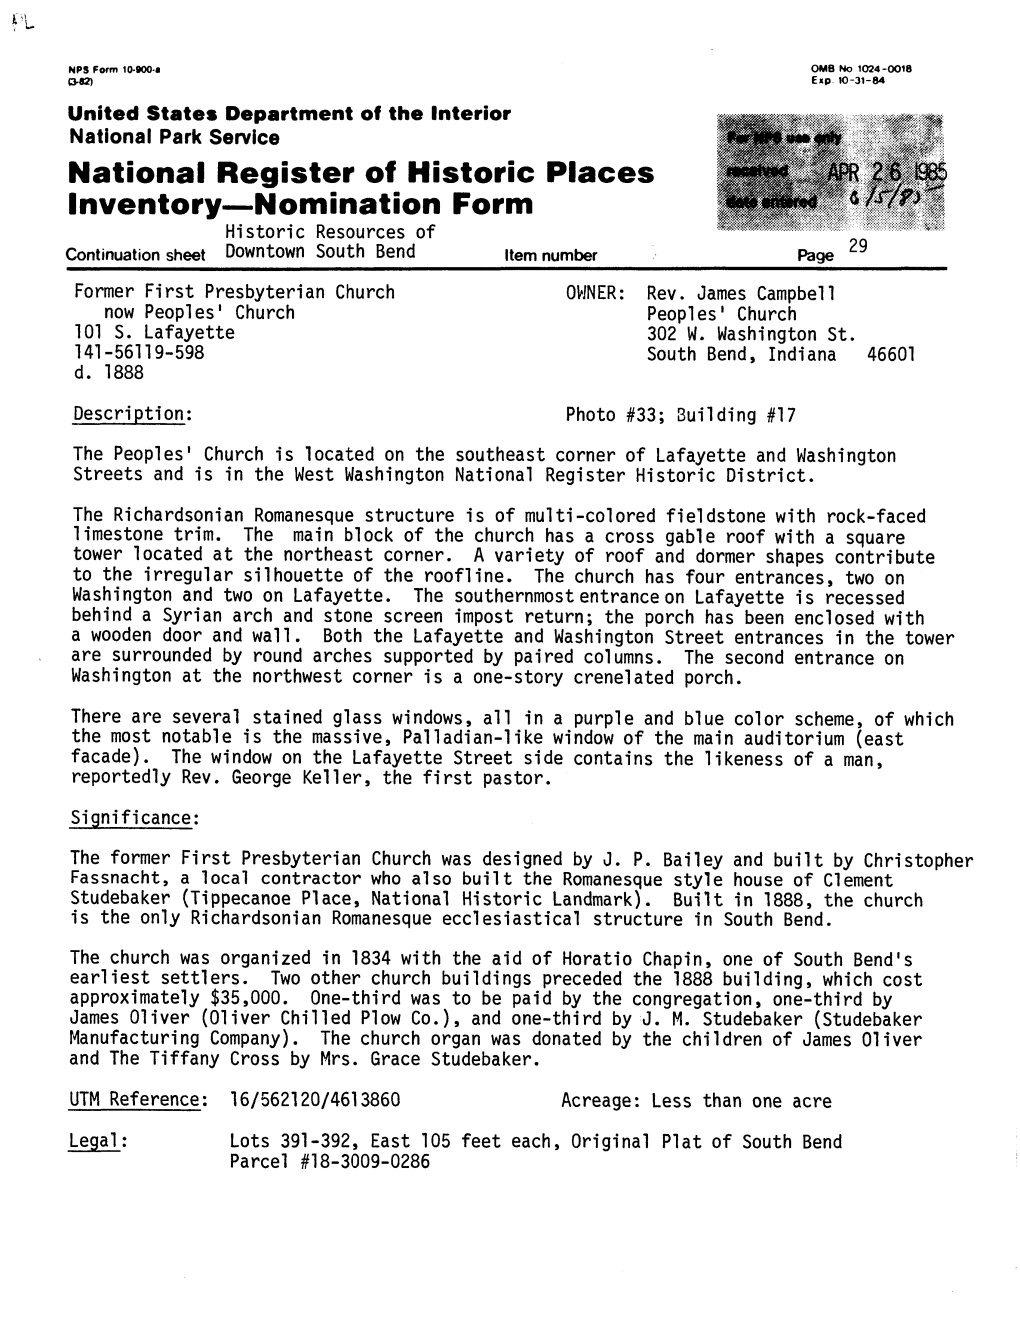 National Register of Historic Inventory—Nomination Form